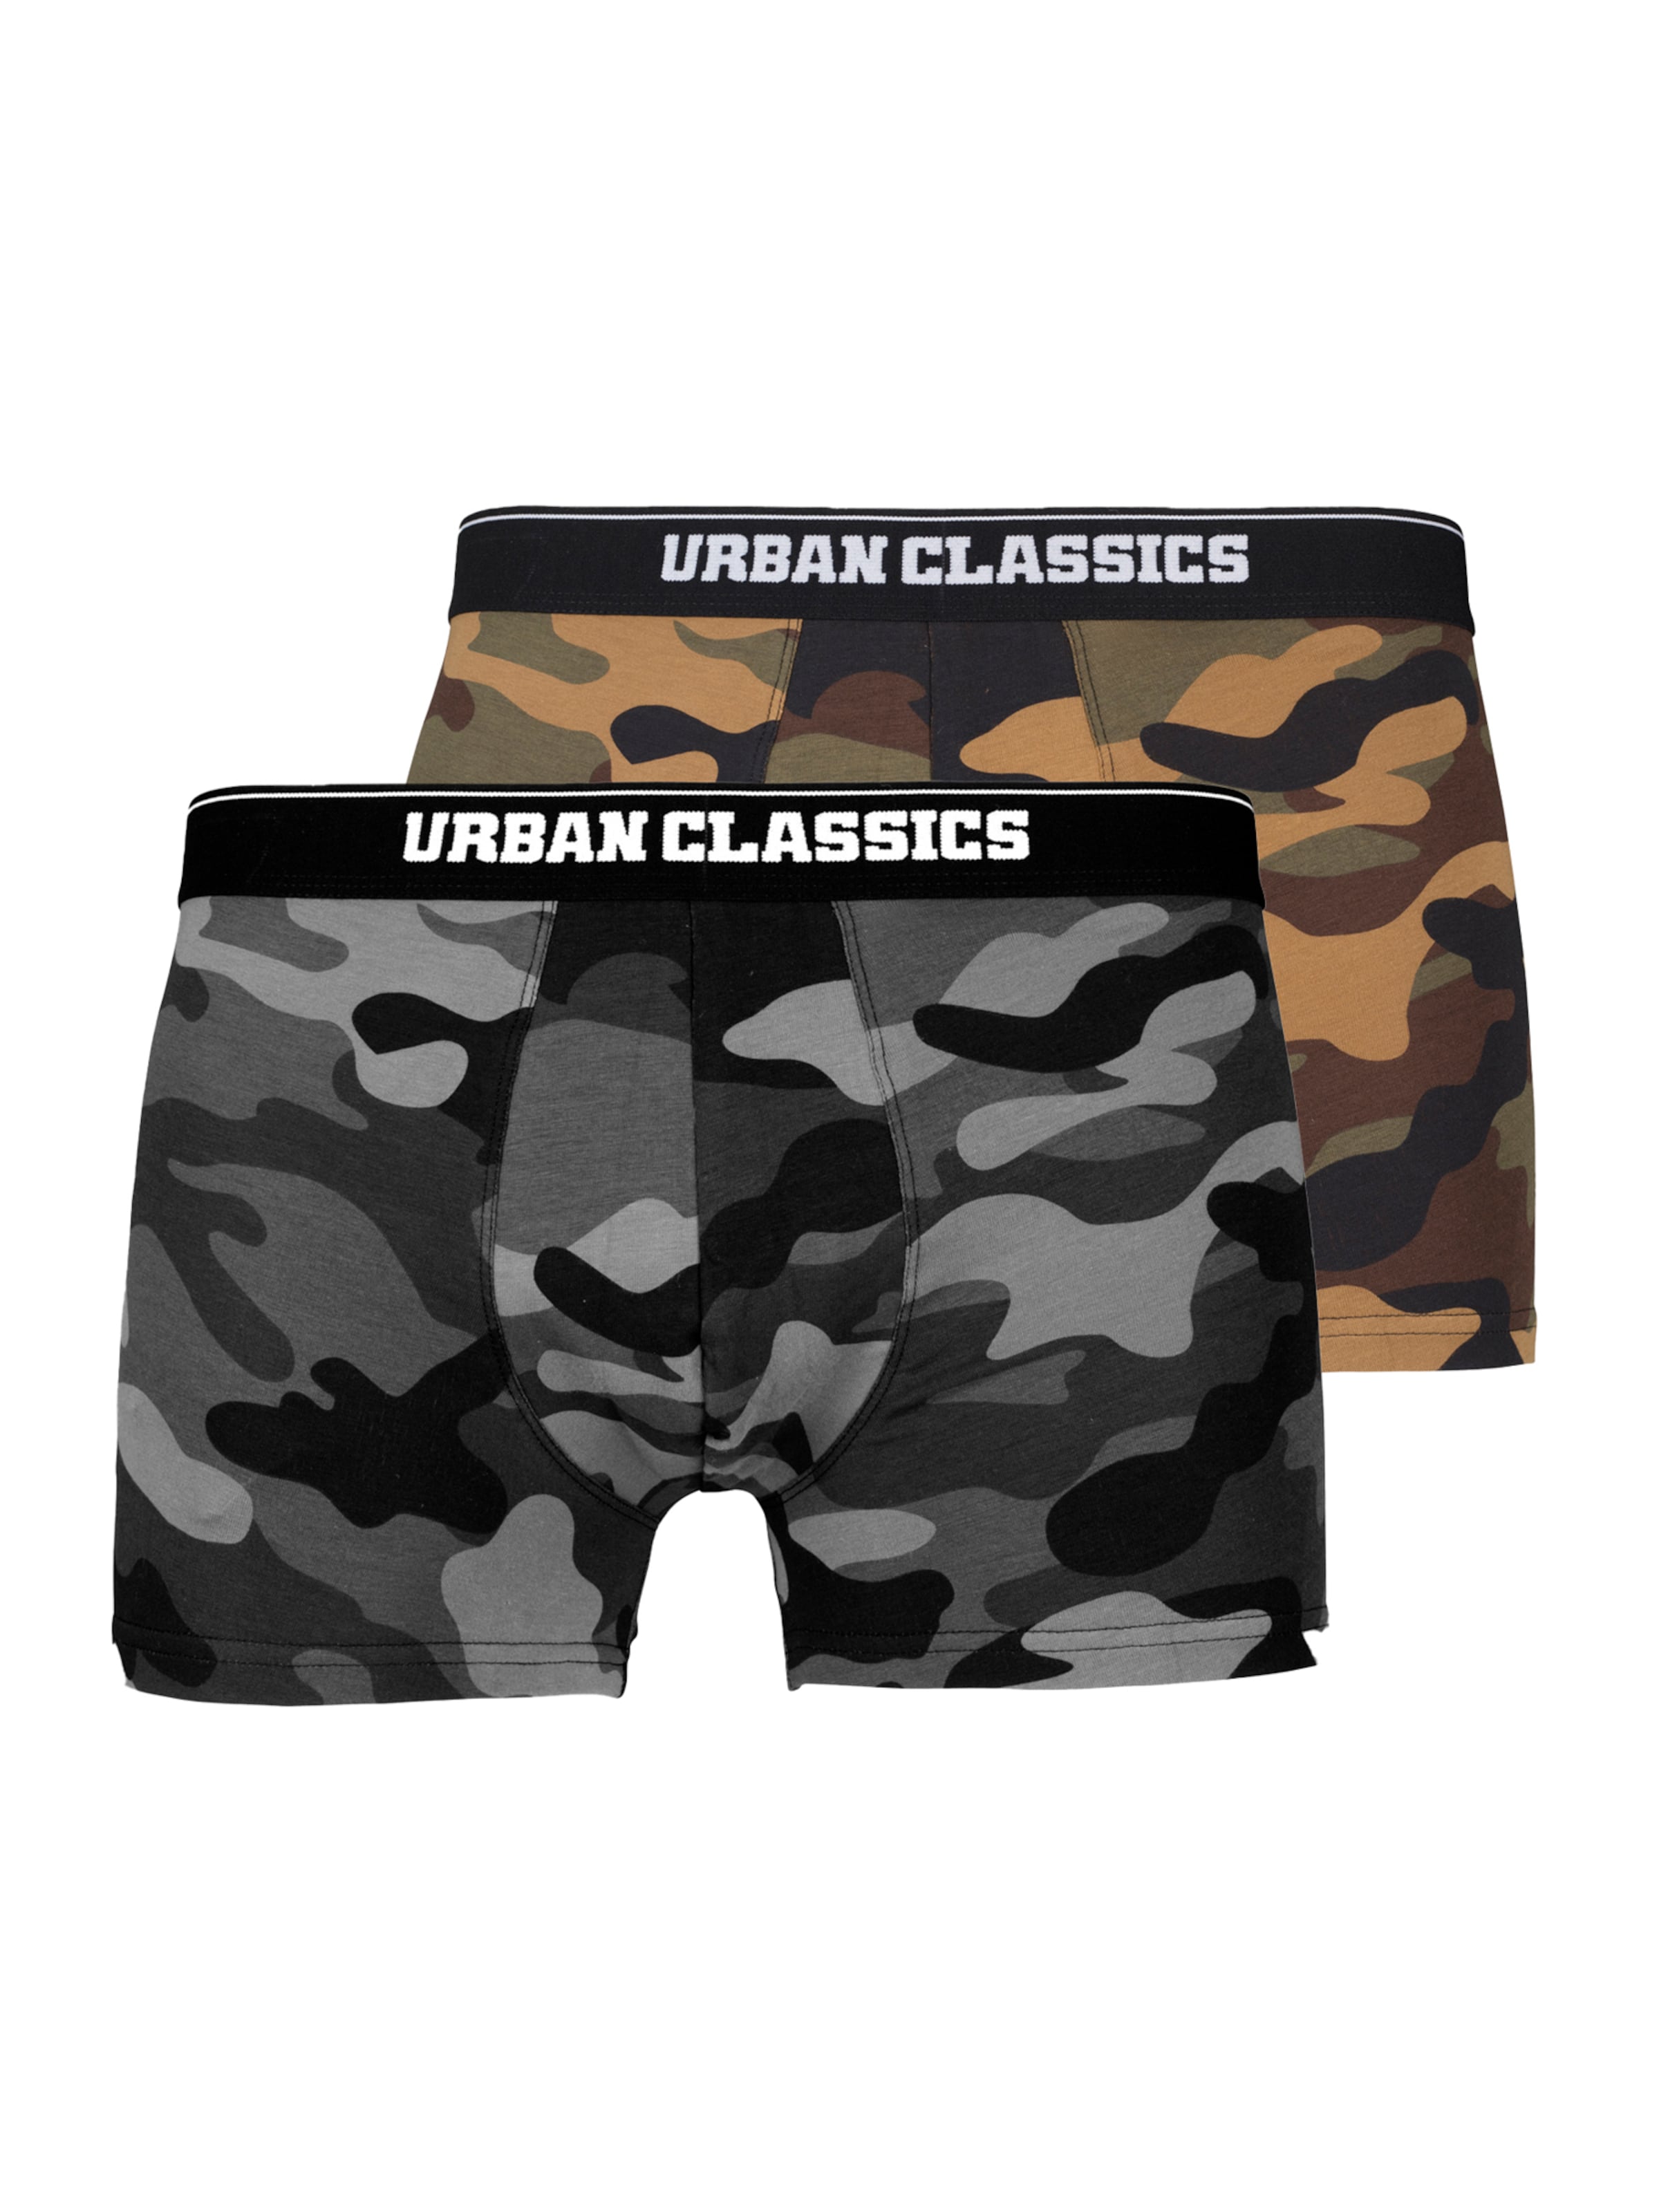 Männer Wäsche Urban Classics Boxershorts in Grau, Khaki - QY07301